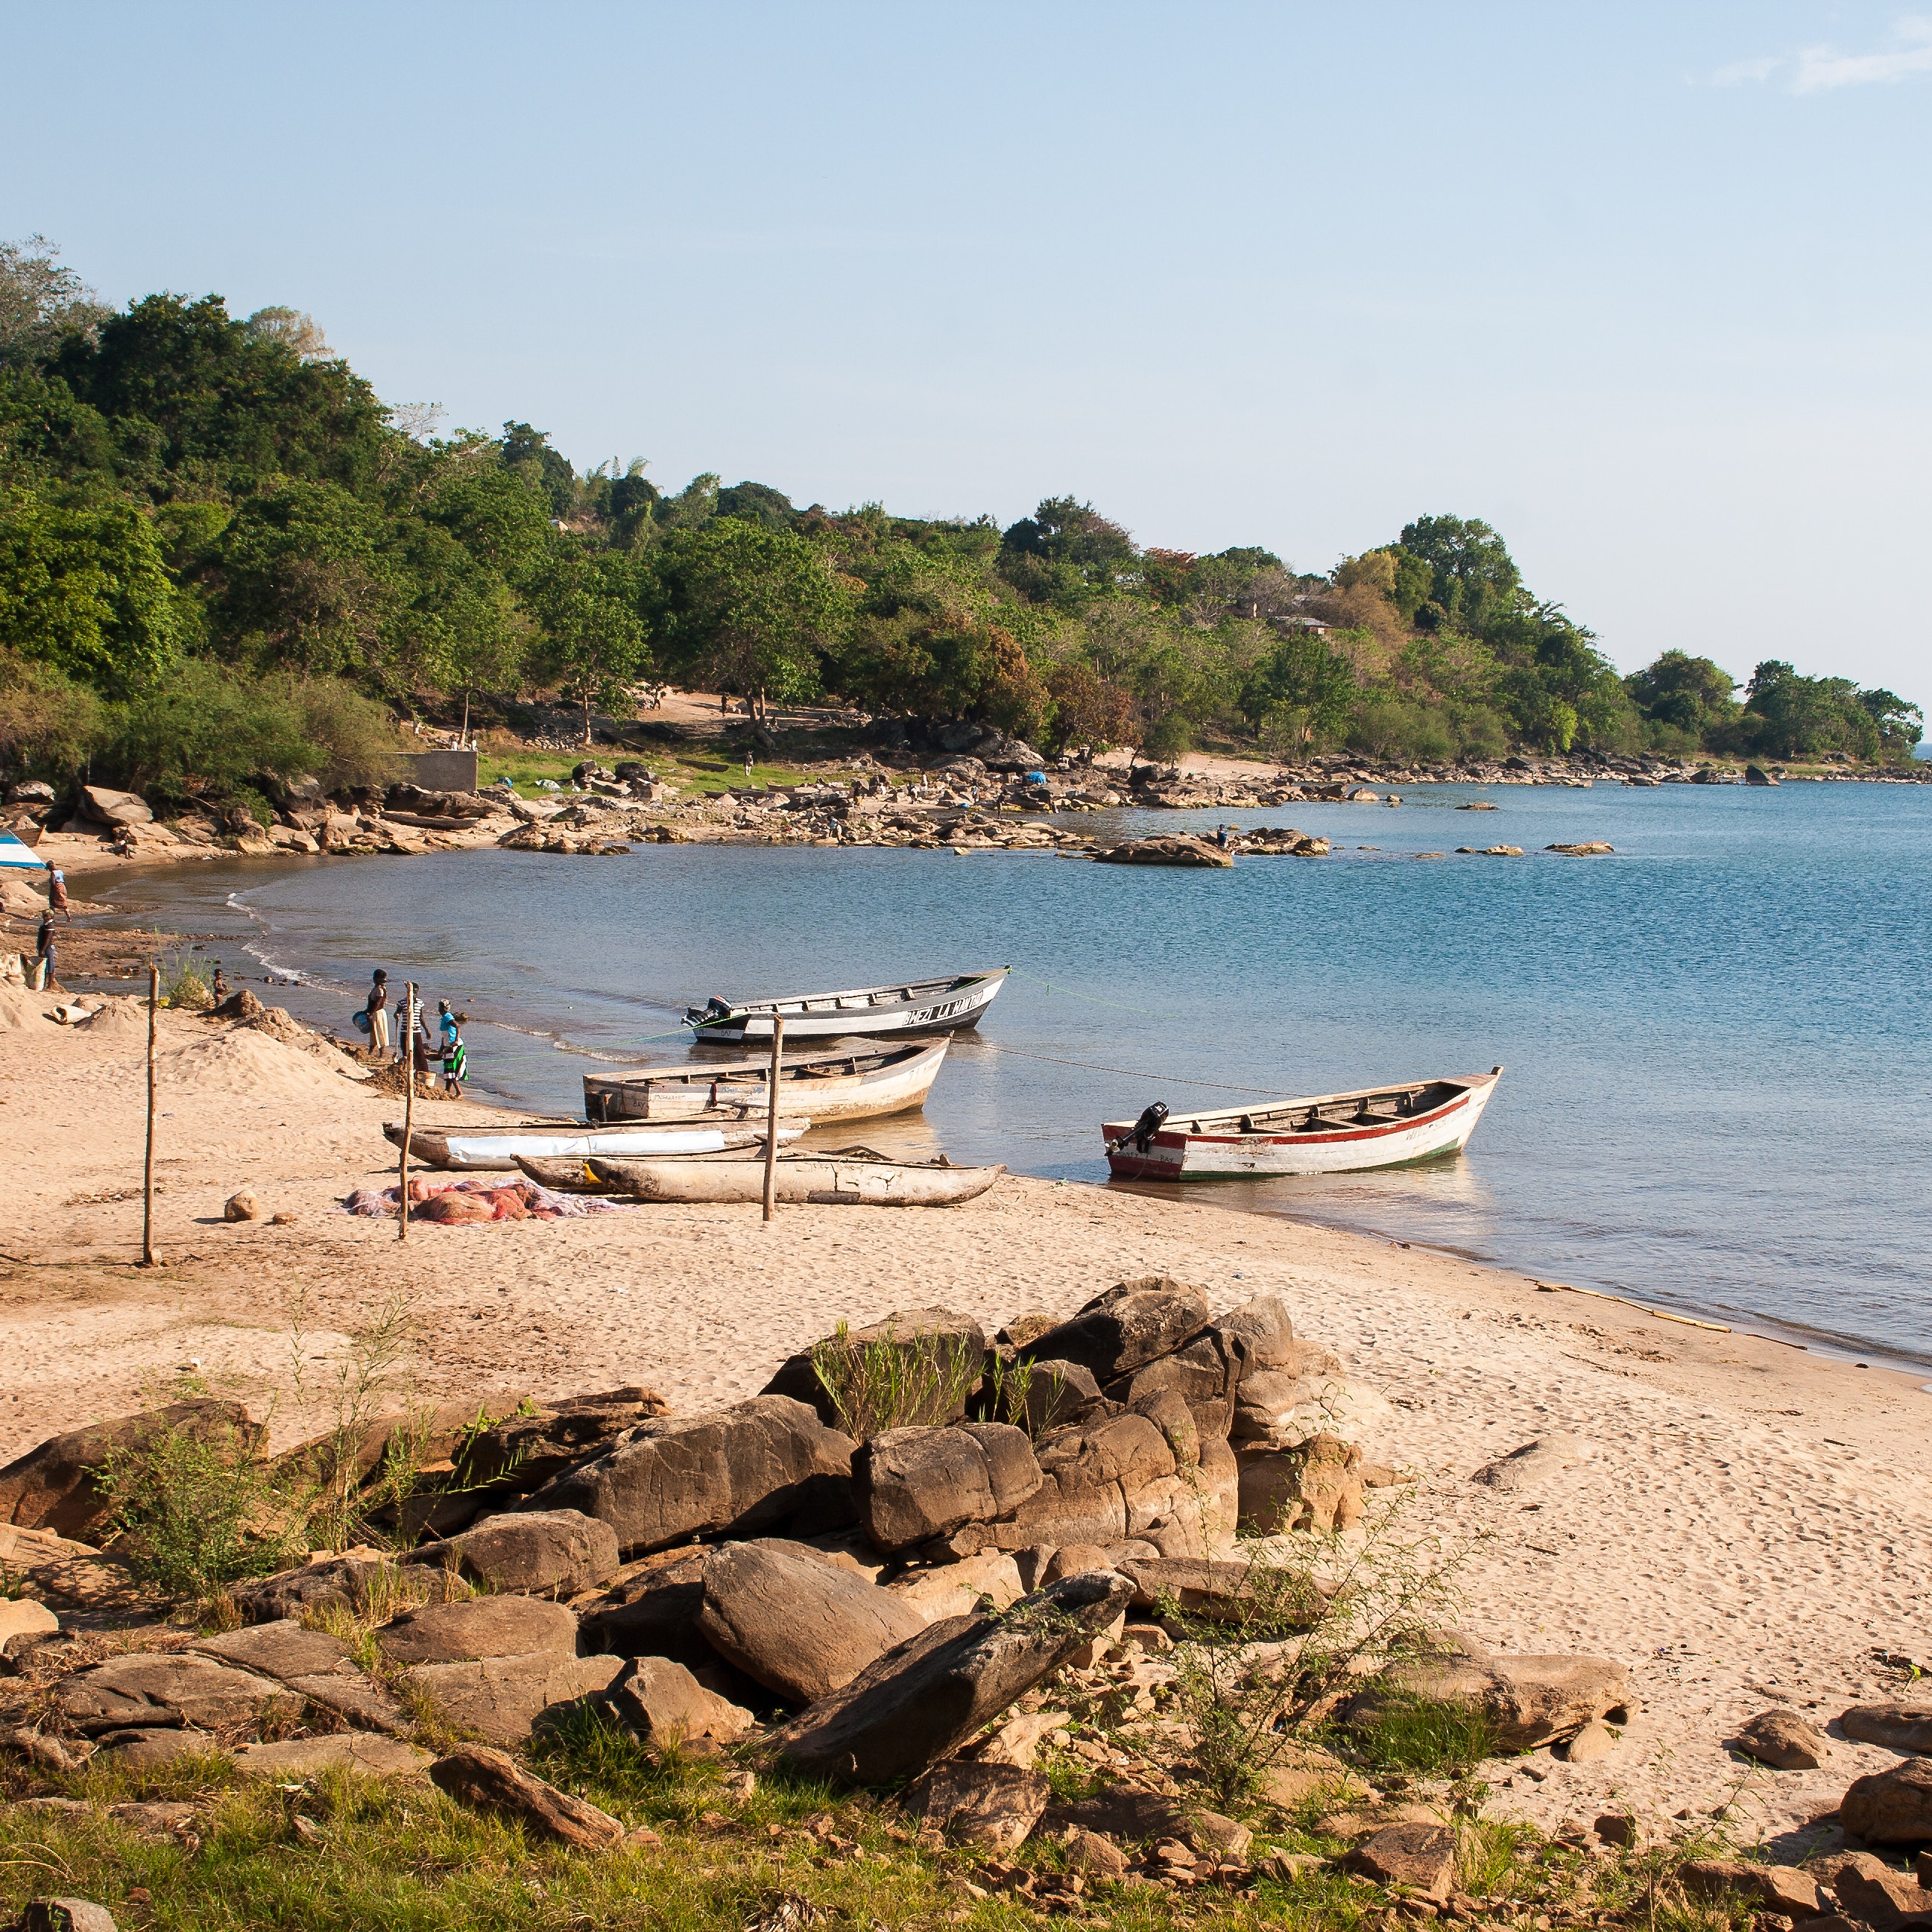 Bay in Nkhata Bay, fishing boats, Malawi.